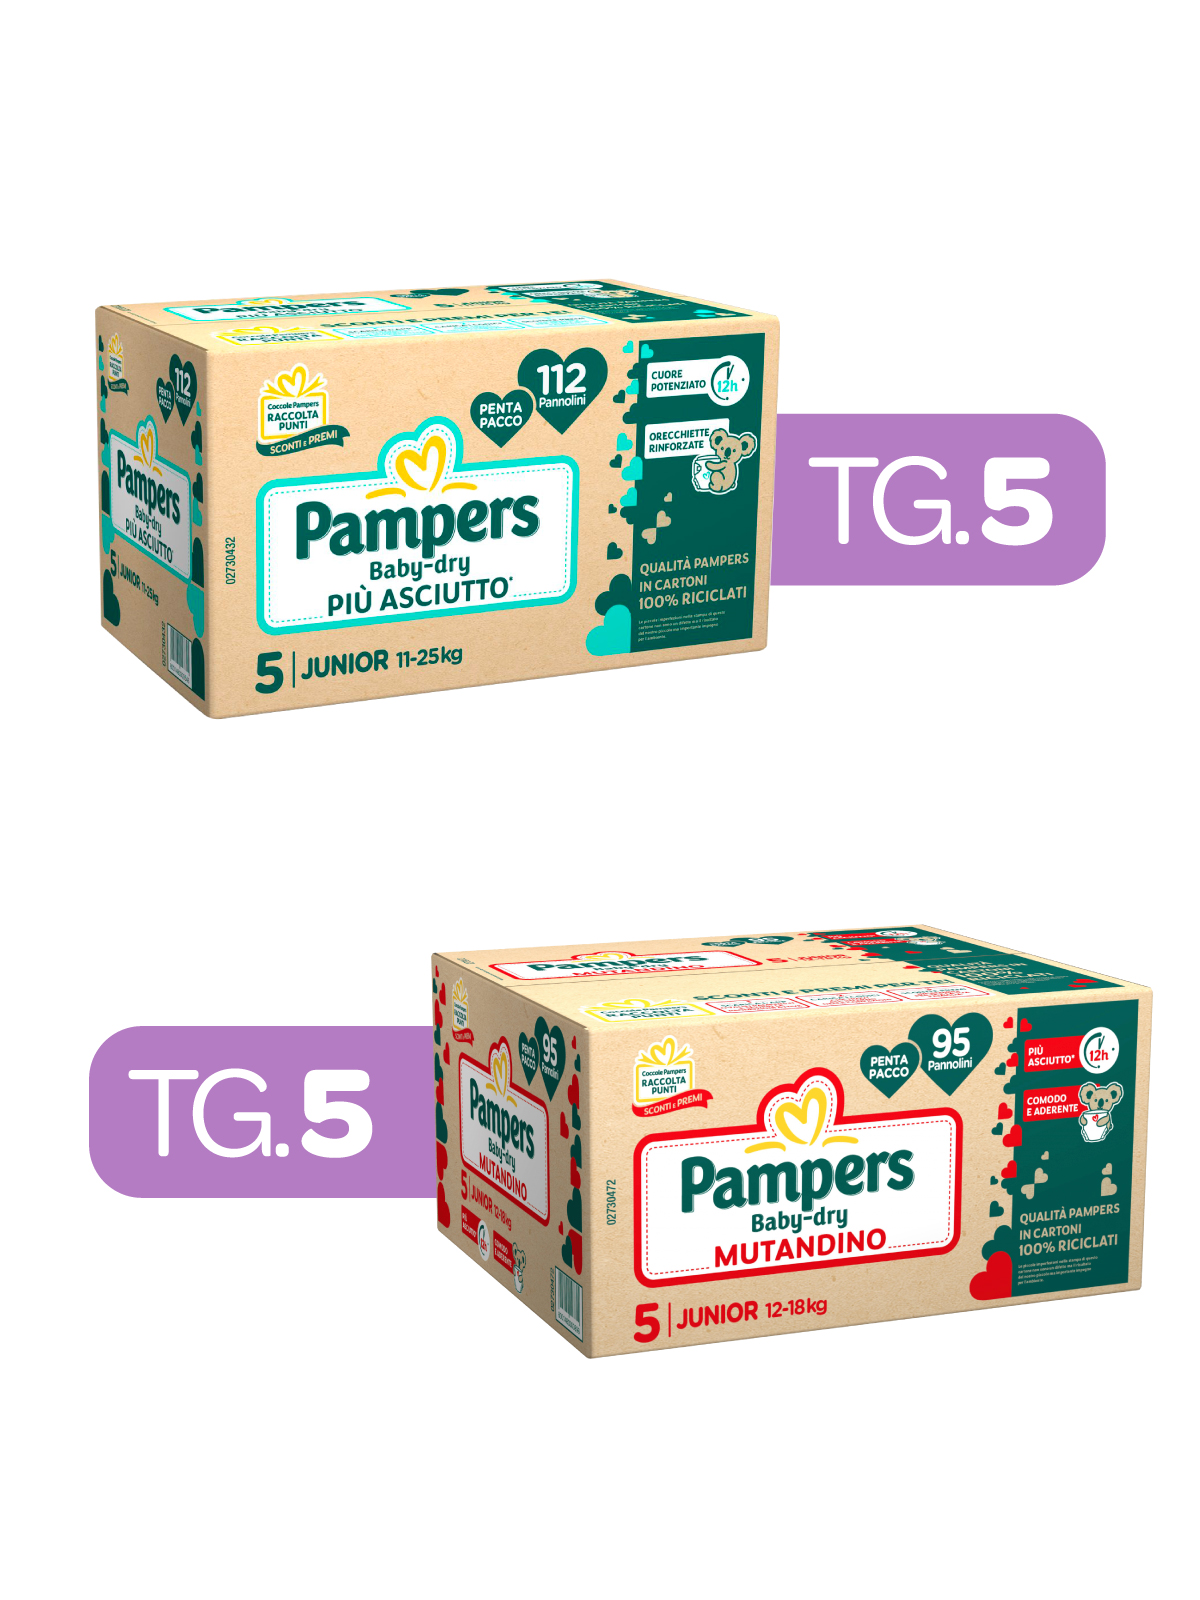 Pampers – baby dry tradizionale tg. 5 x112 pz + mutandino baby dry tg. 5 x95 pz - 